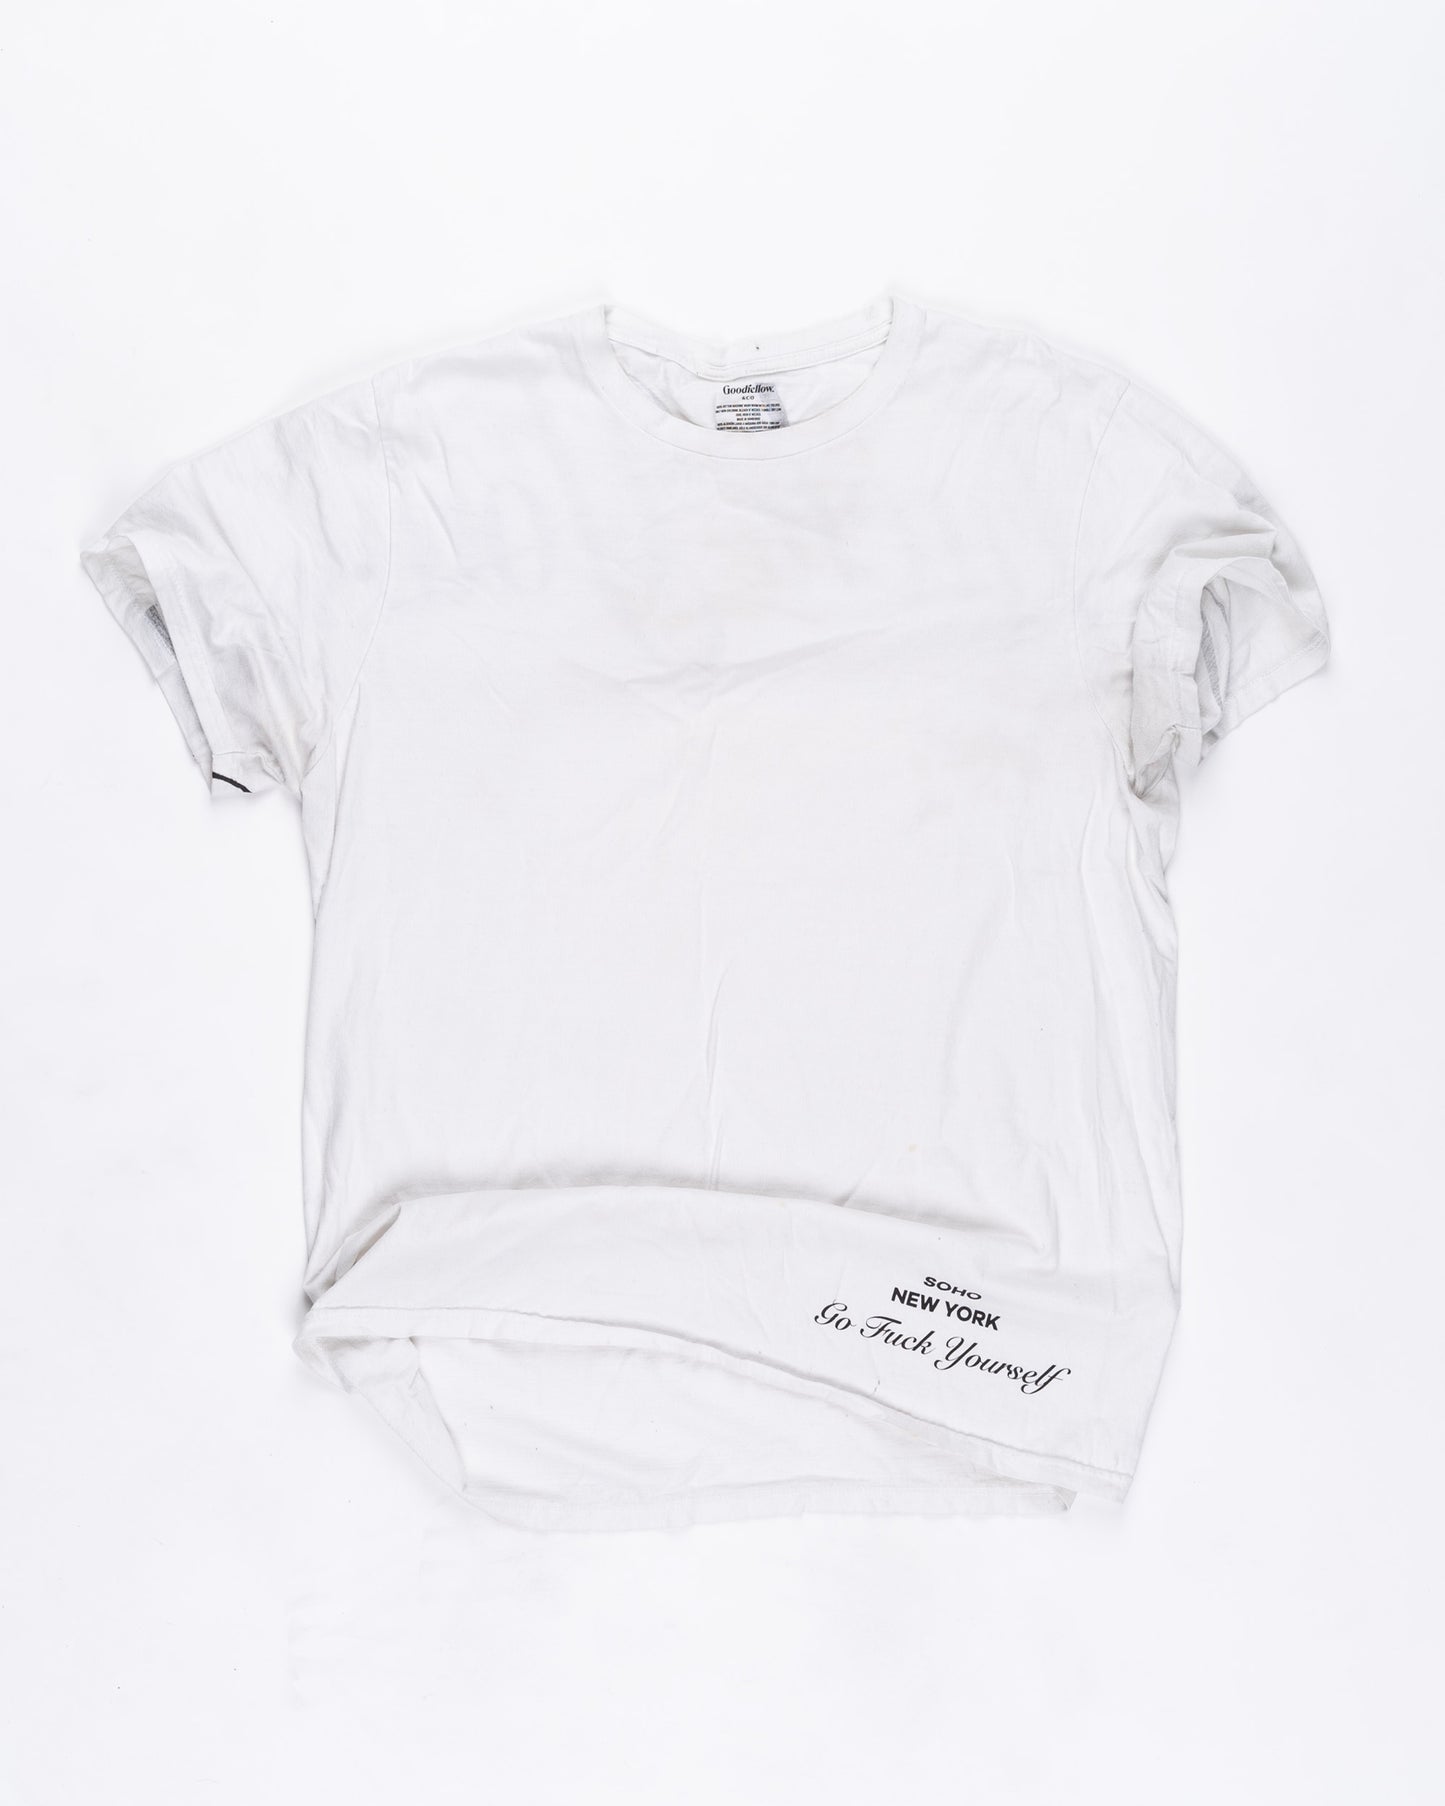 White Cotton T-Shirt Size: Large